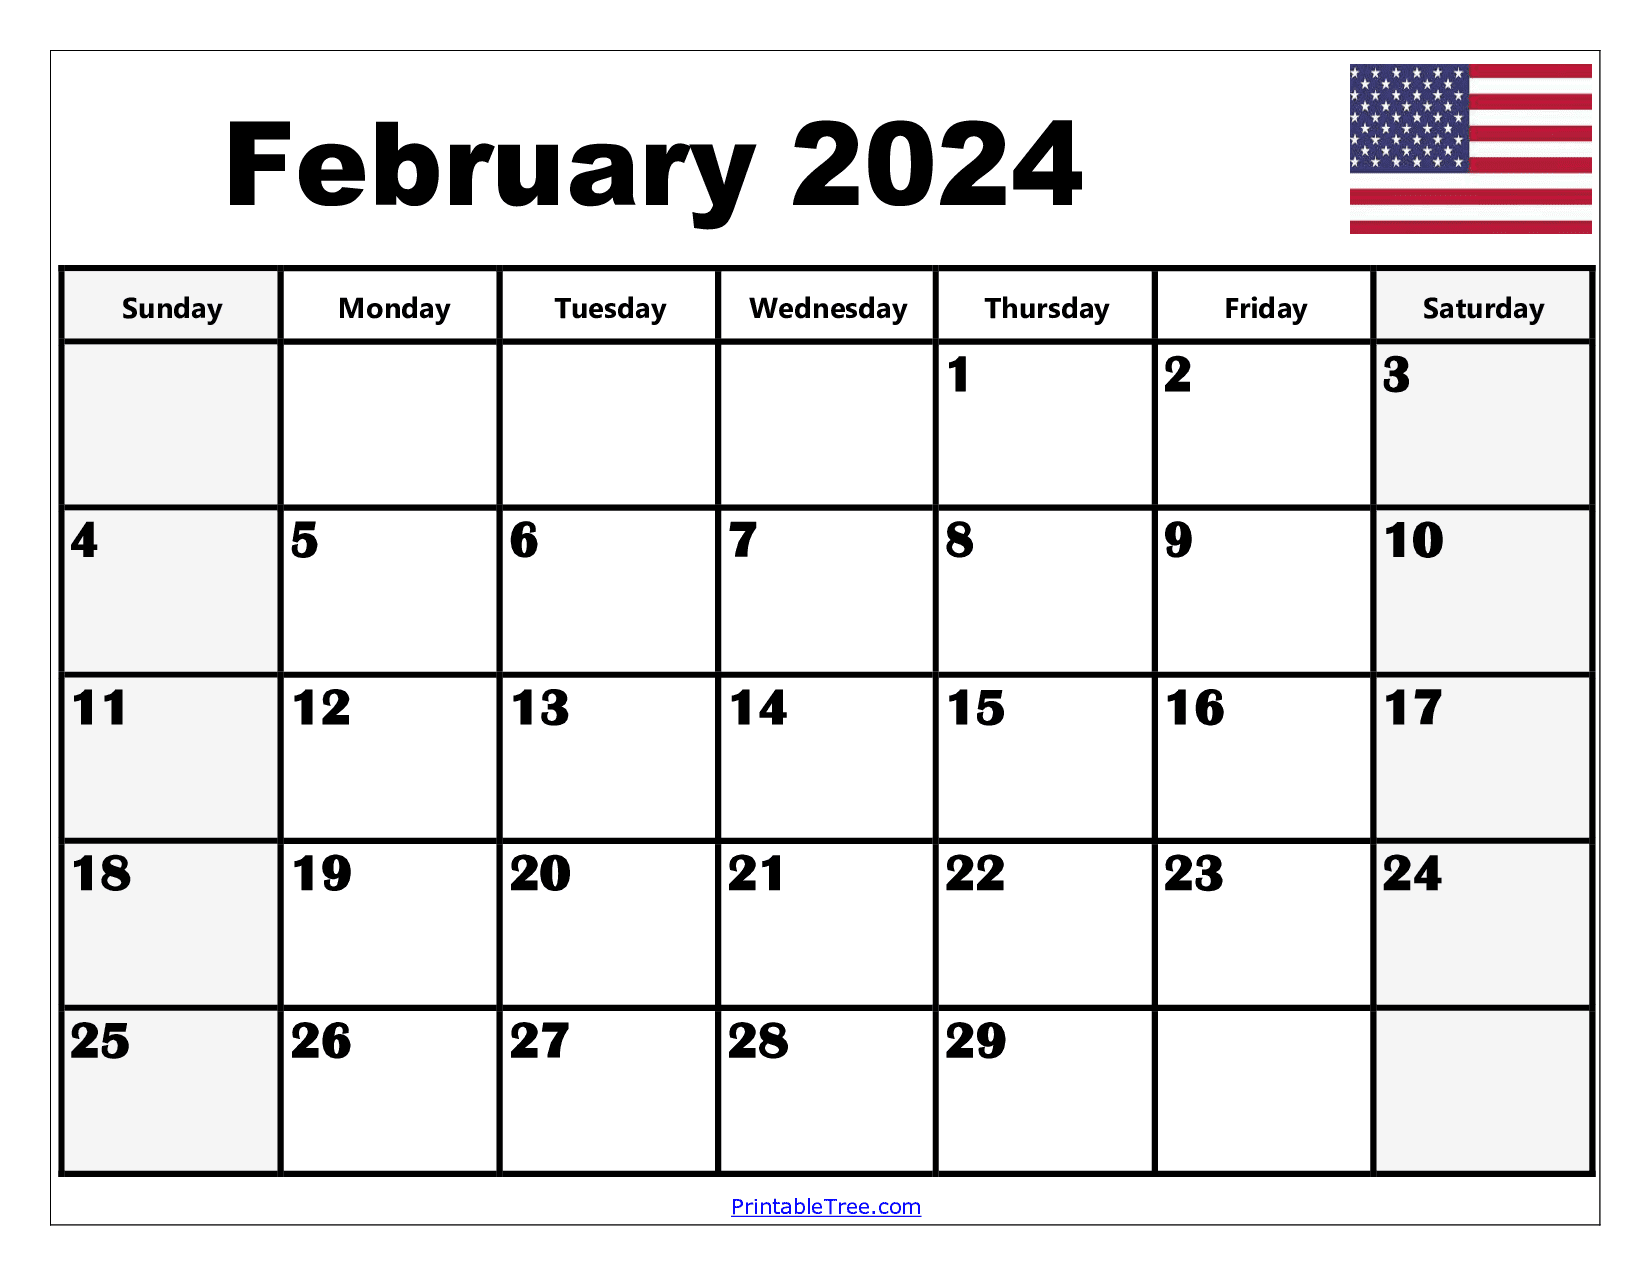 February 2024 Calendar Printable Pdf Template With Holidays for February 2024 Calendar With Holidays Printable Free